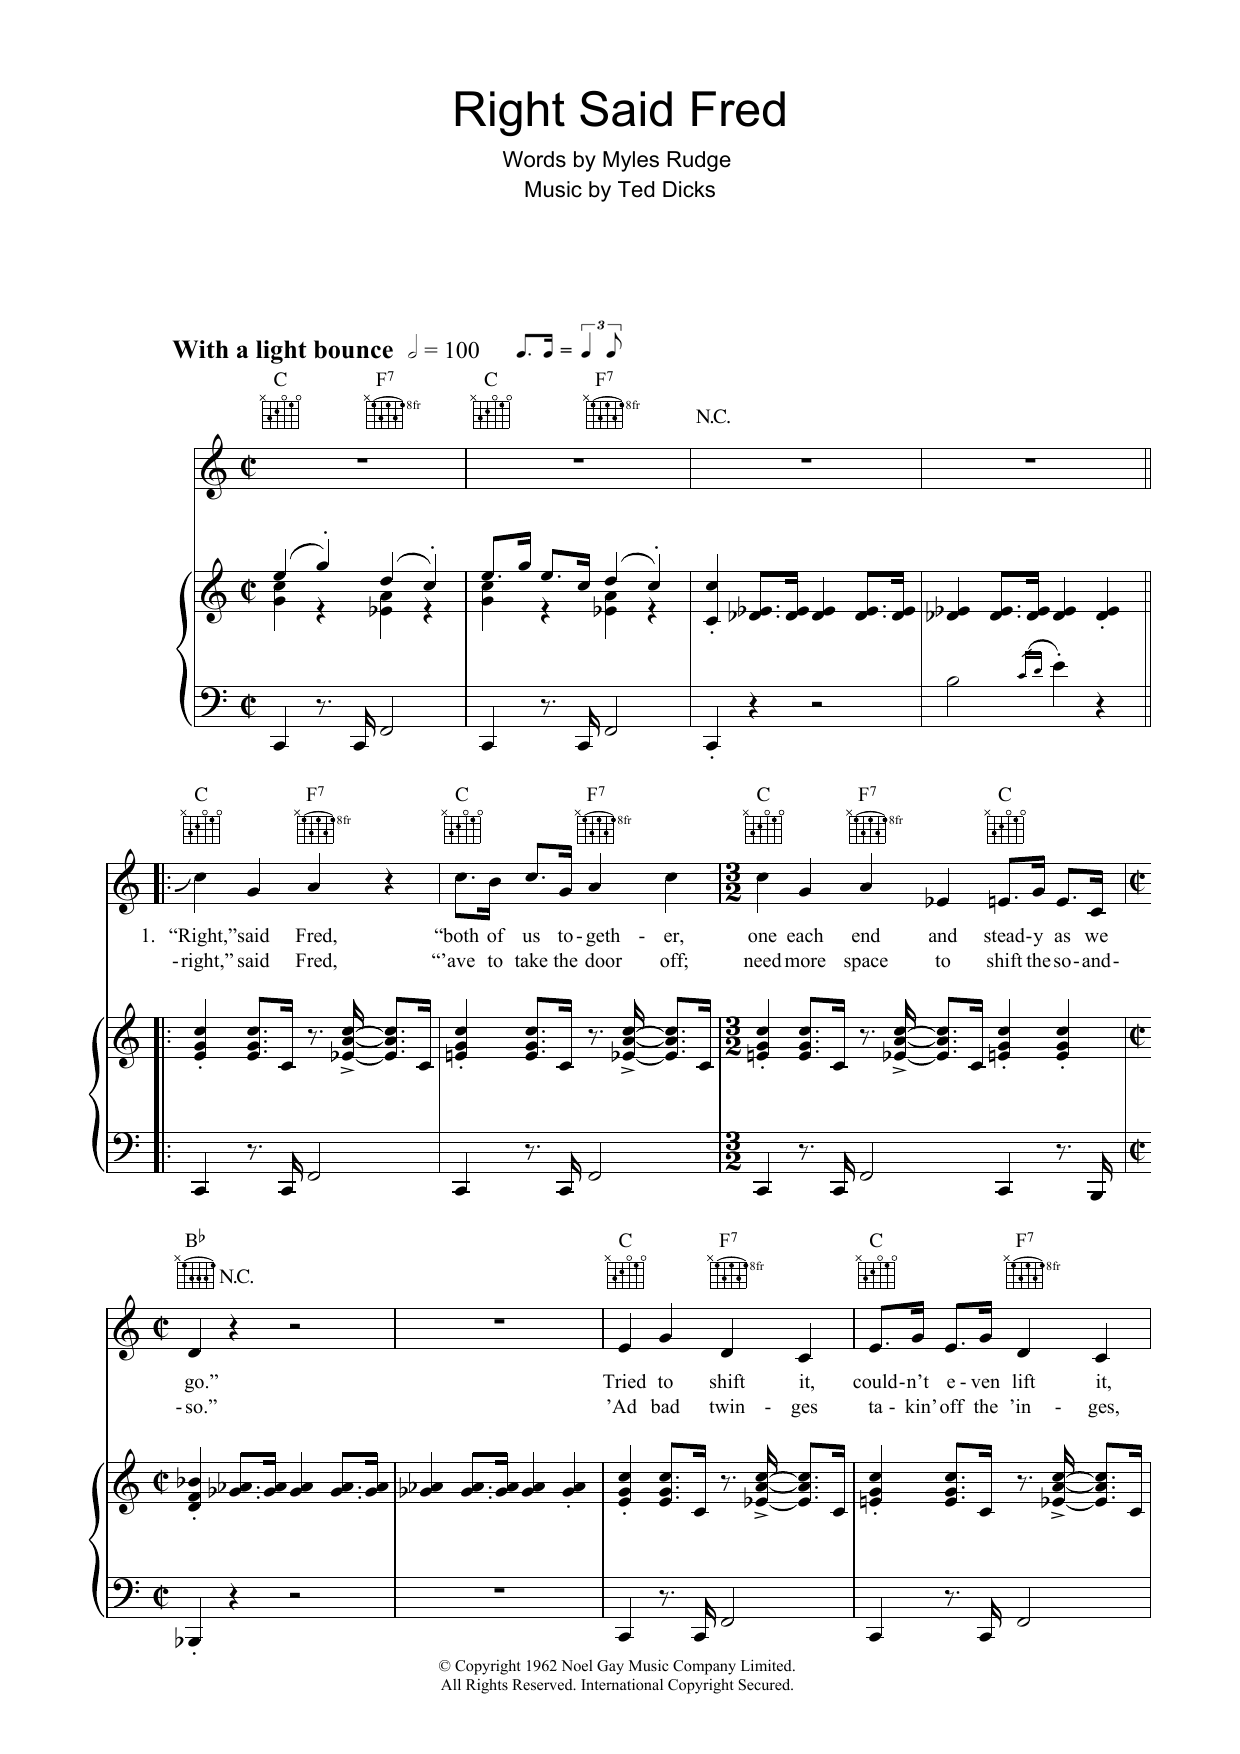 Bernard Cribbins Right Said Fred Sheet Music Notes & Chords for Piano, Vocal & Guitar - Download or Print PDF